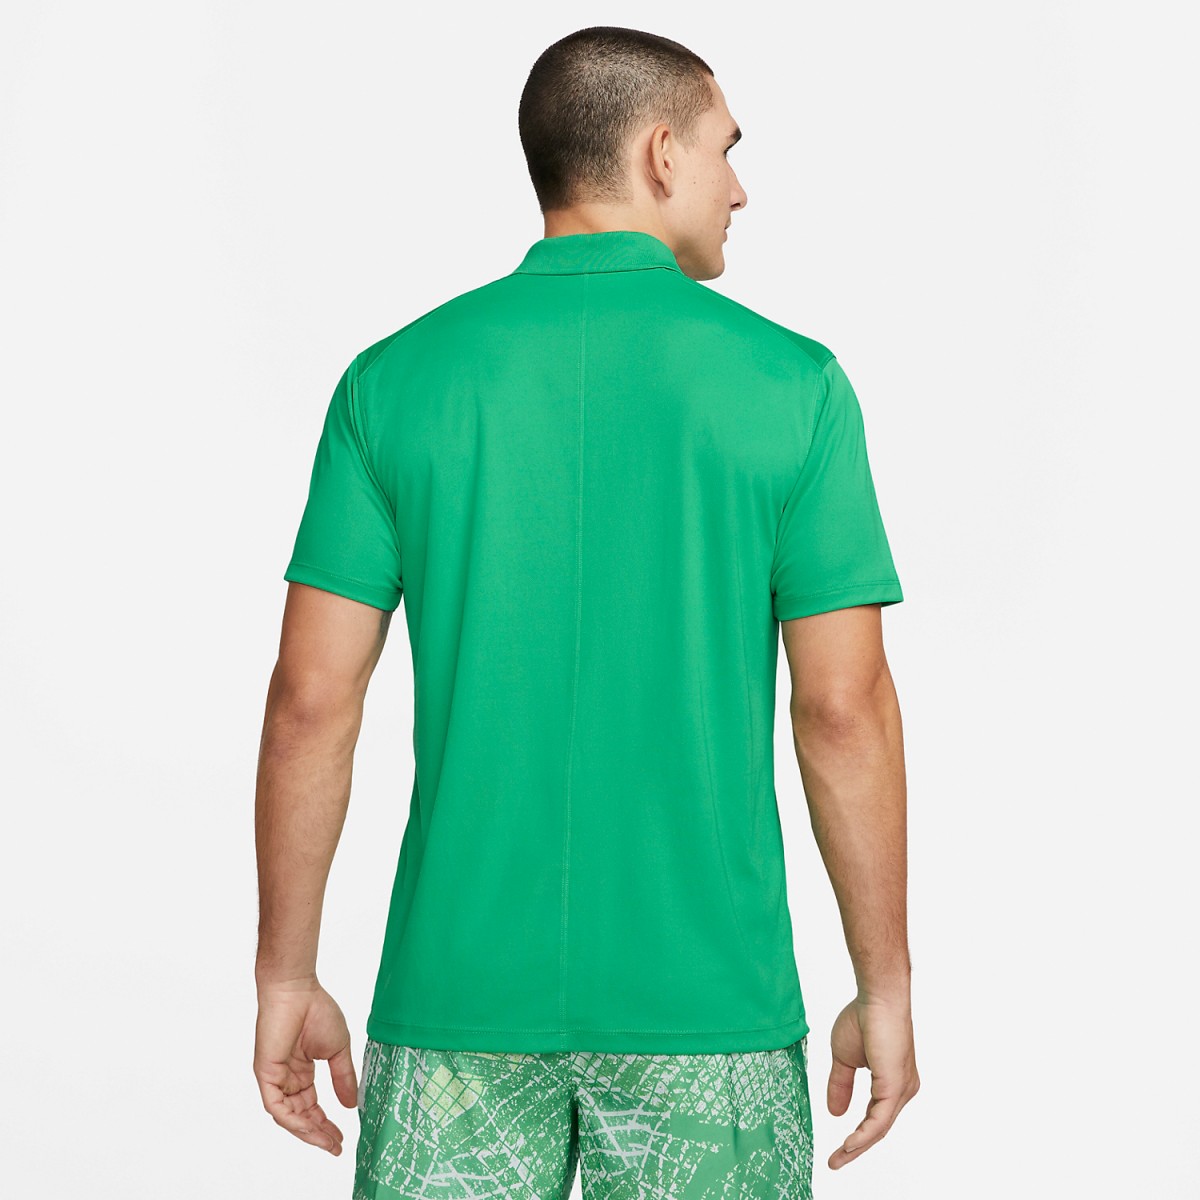 Теннисная футболка мужская Nike Core Pique Polo stadium green/white